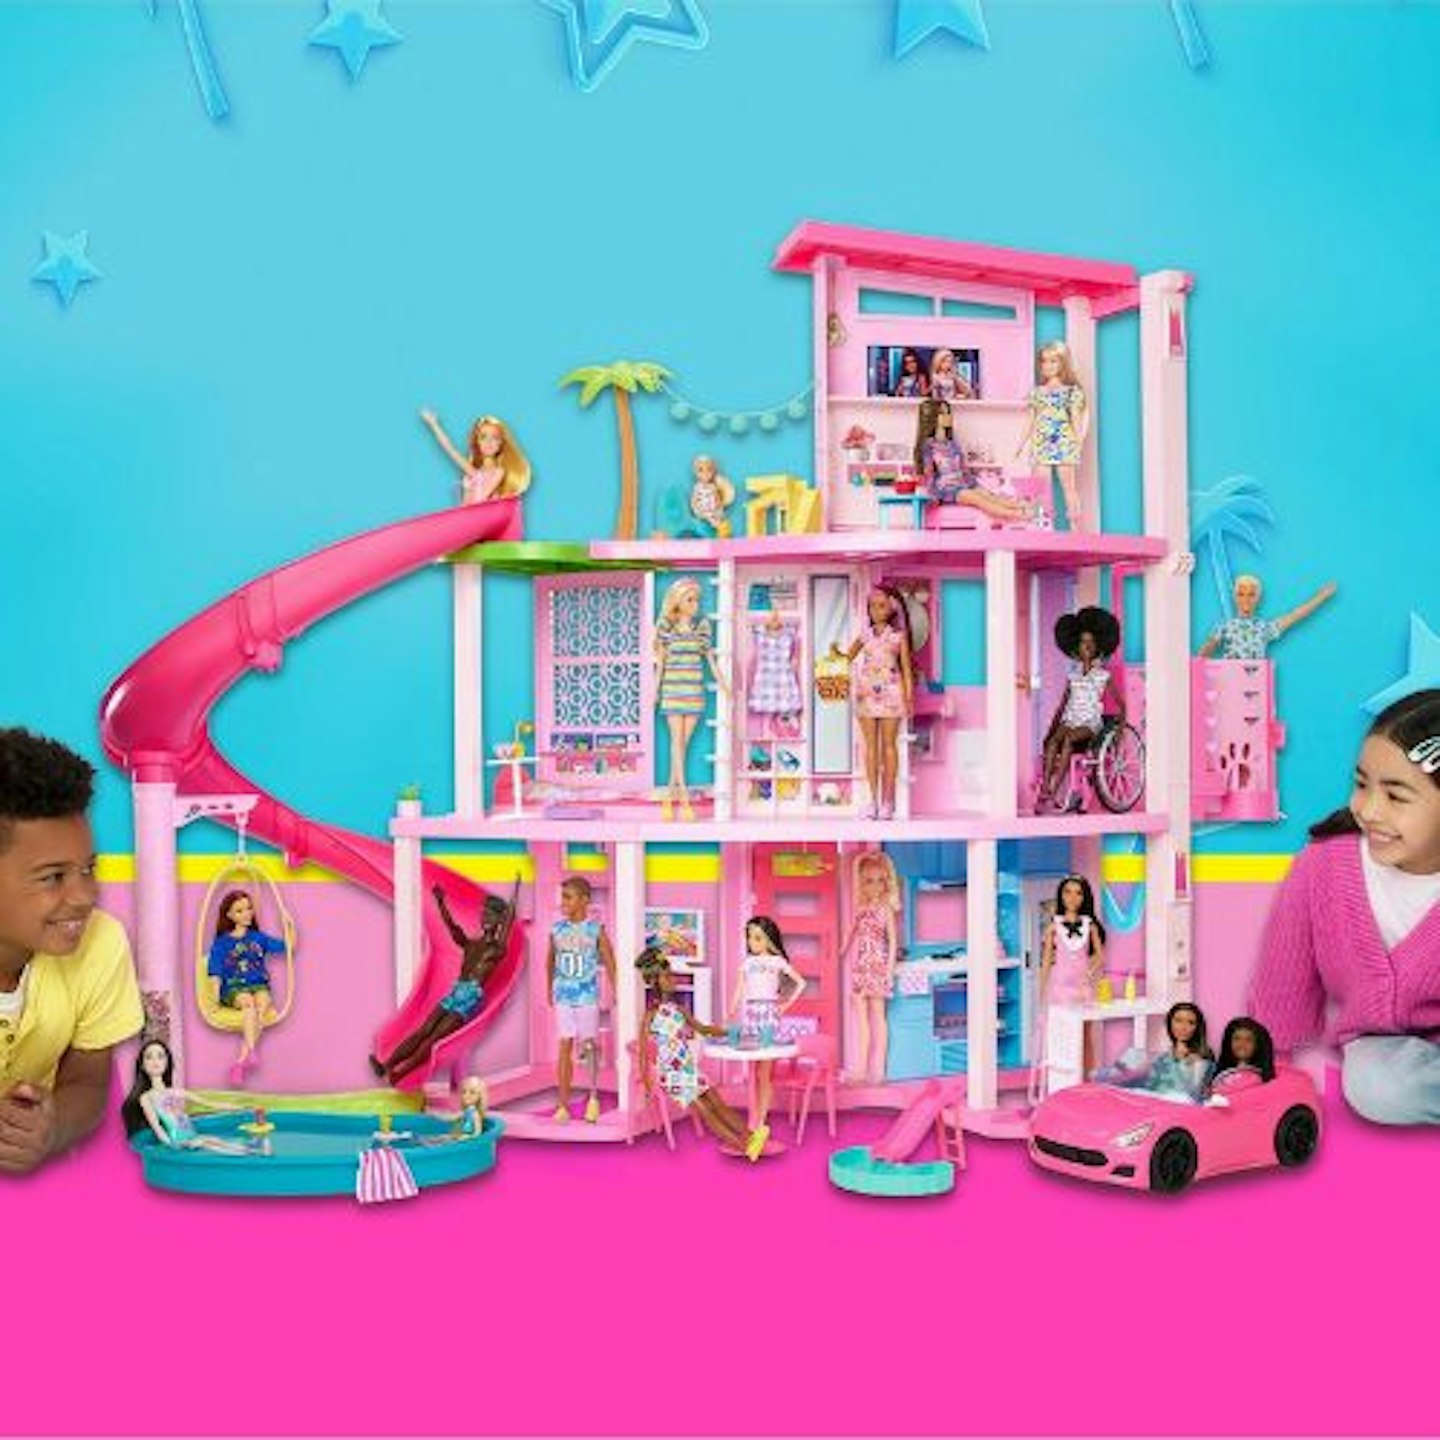 https://images.bauerhosting.com/affiliates/sites/12/2023/11/Barbie-DreamHouse-Doll-Playset-Slide-and-Accessories.jpg?auto=format&w=1440&q=80